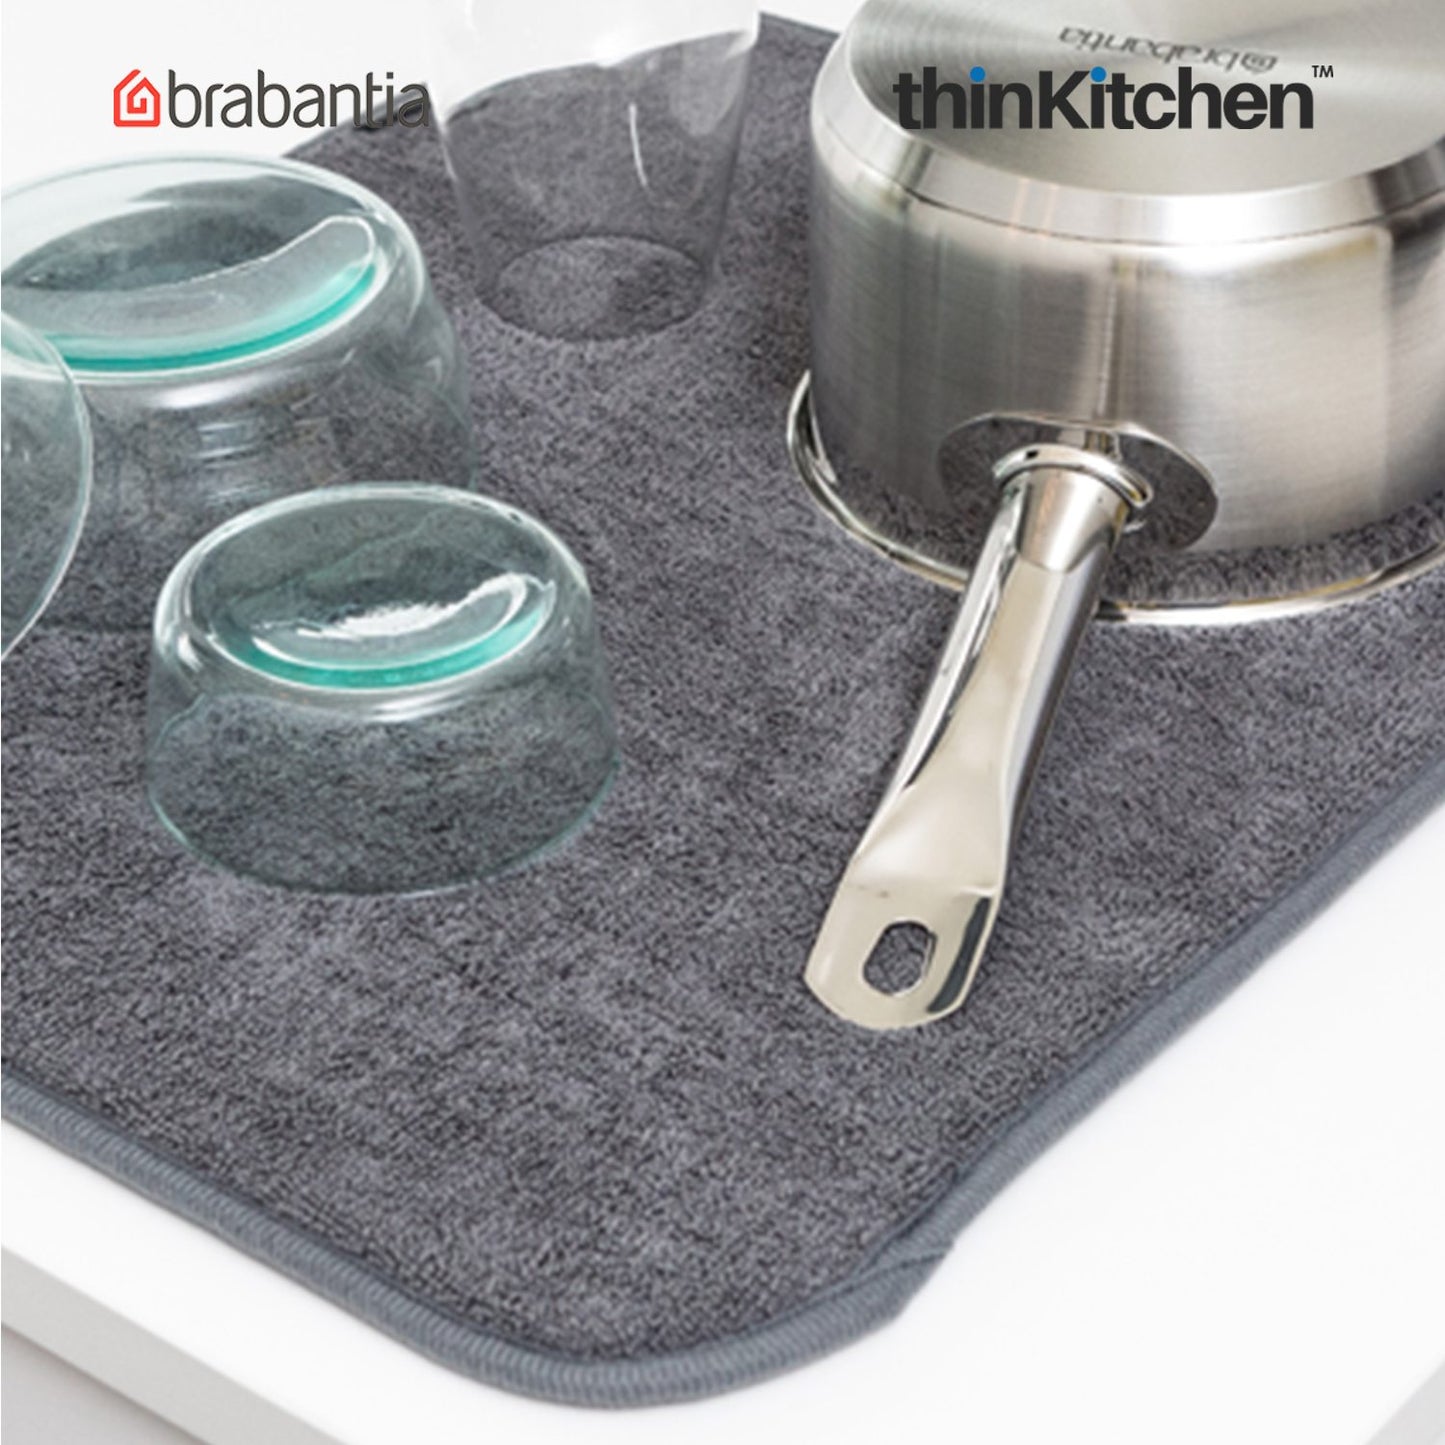 Brabantia Microfibre Dish Drying Mat Dark Grey